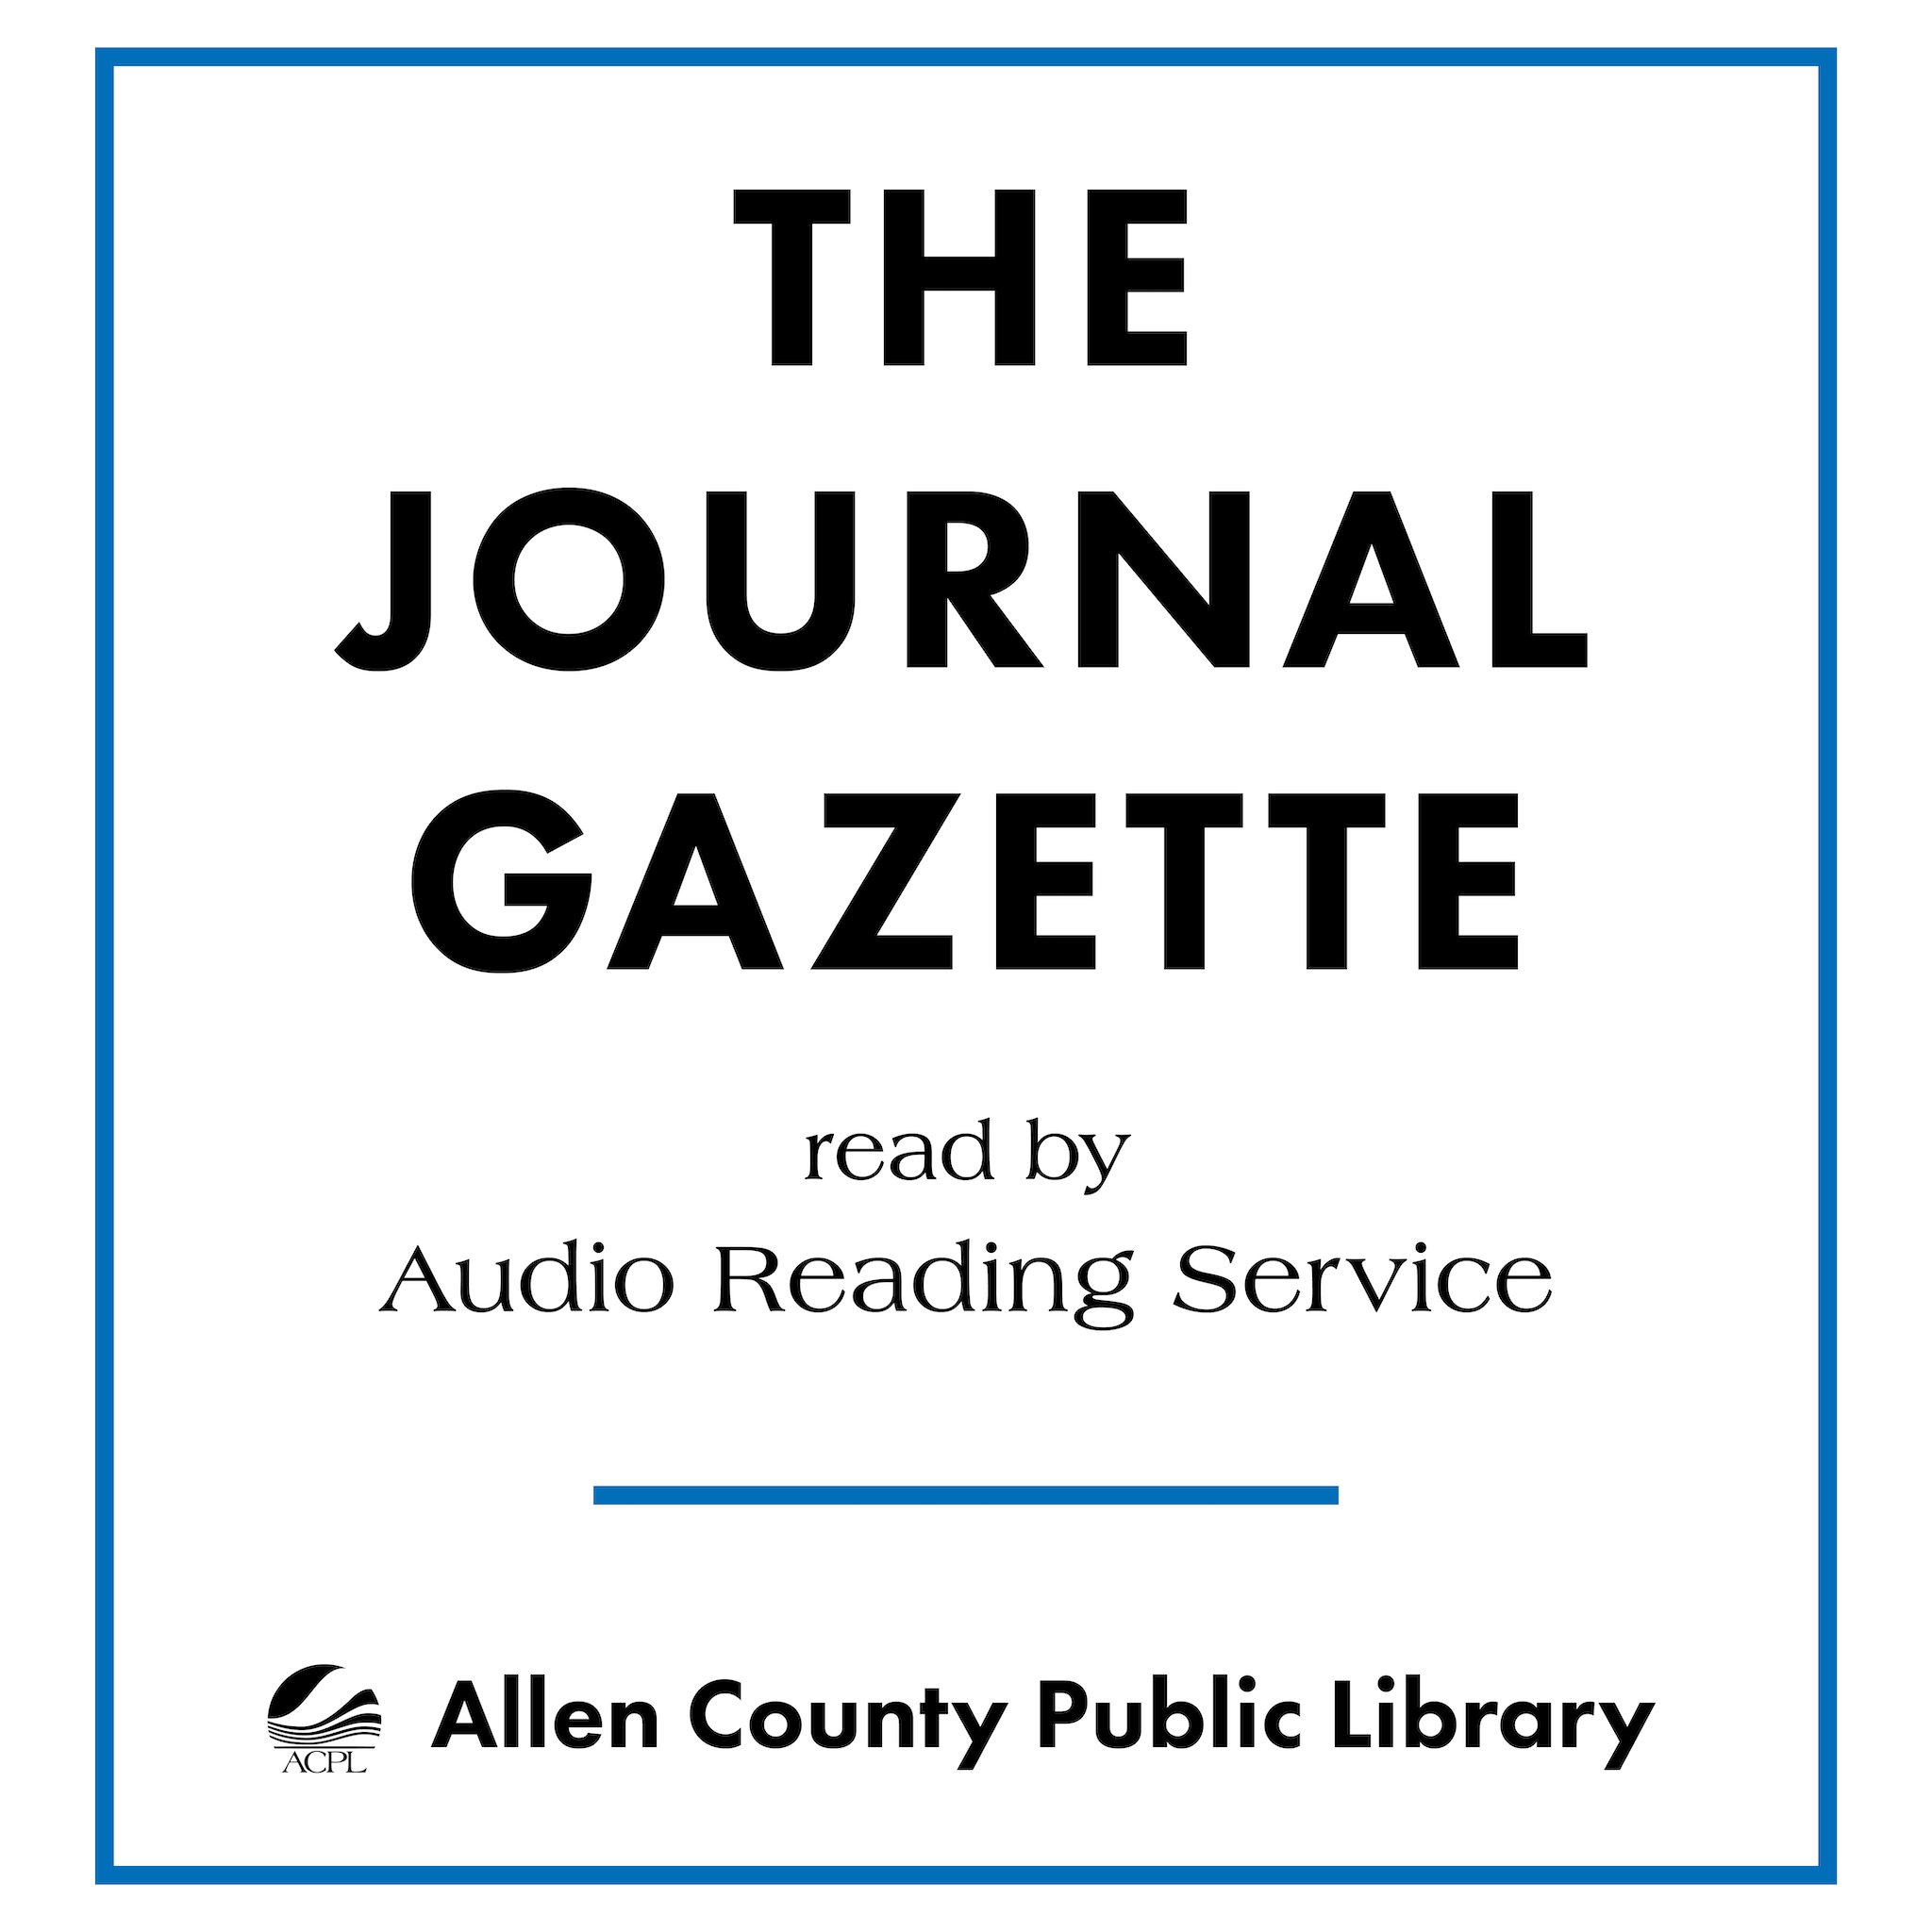 The Journal Gazette